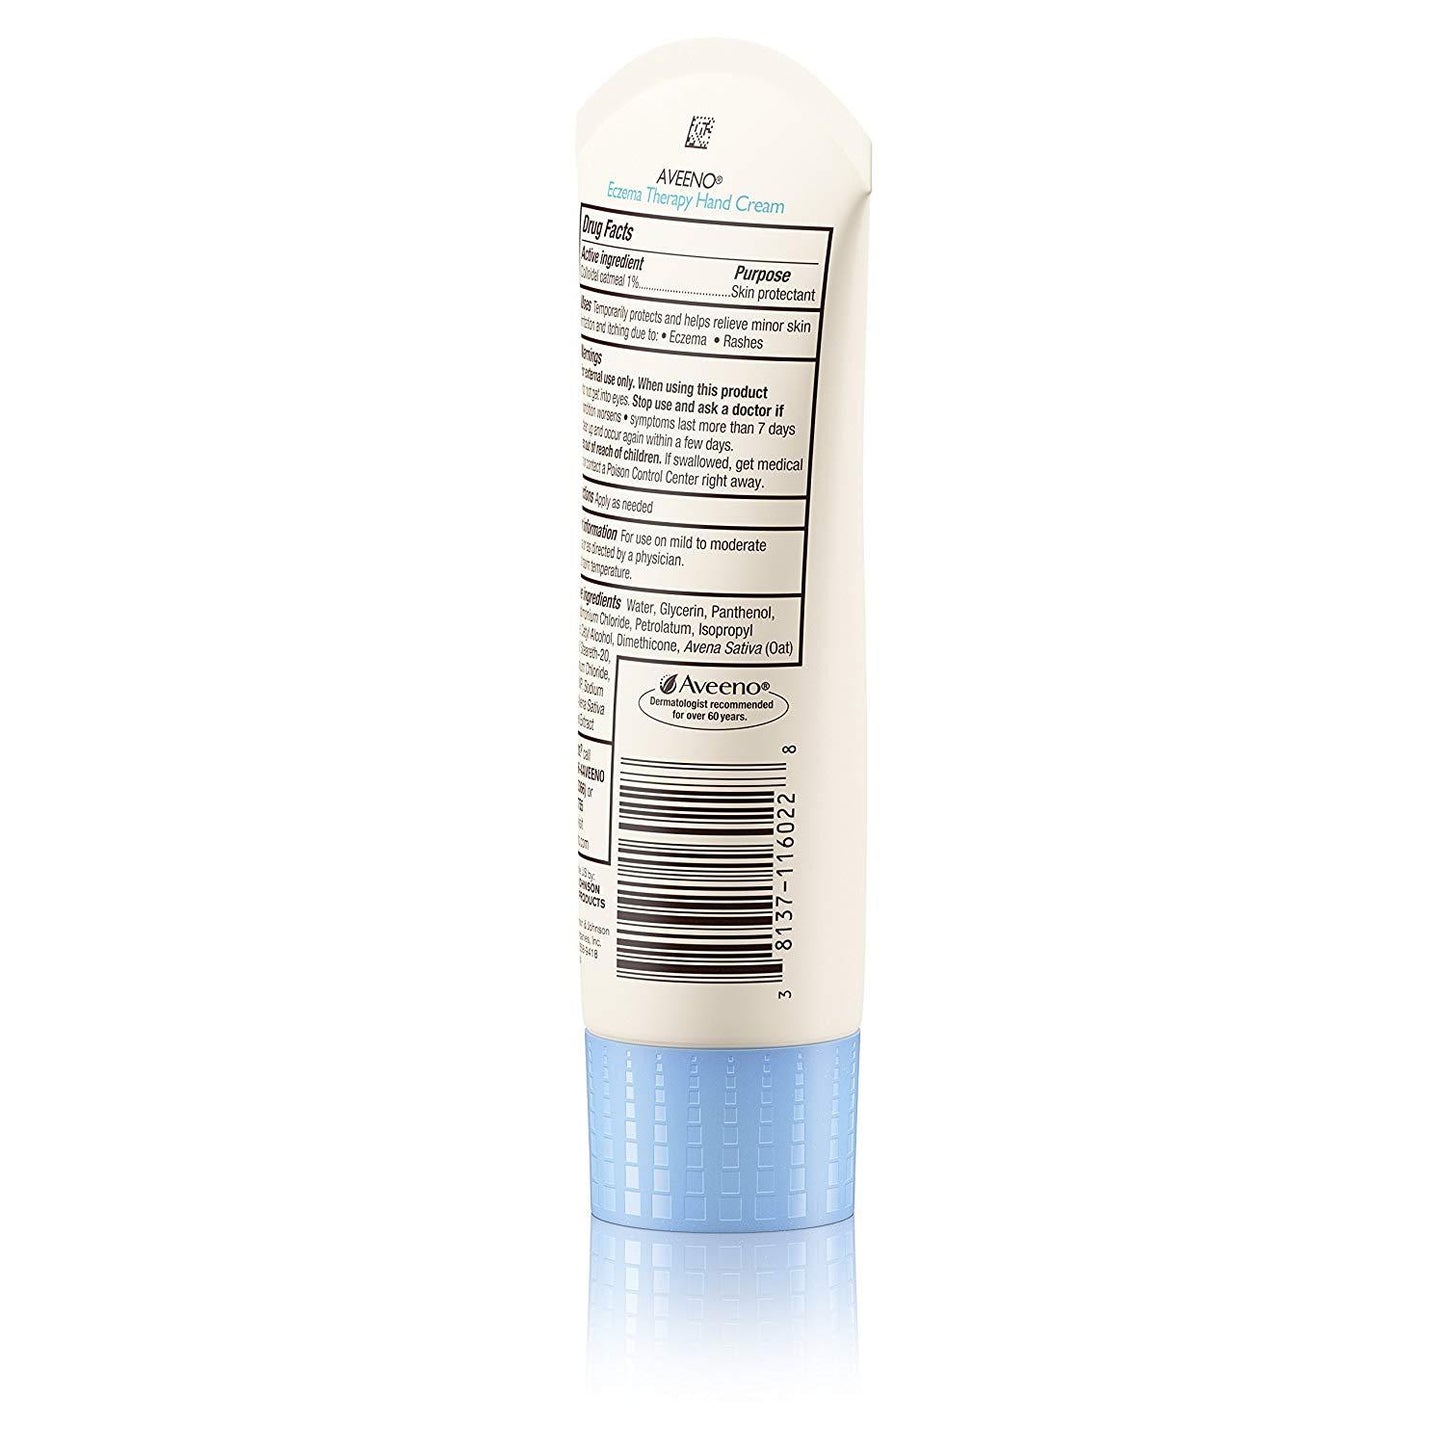 Aveeno Eczema Therapy Hand Cream 2.6 oz / 73.7 g